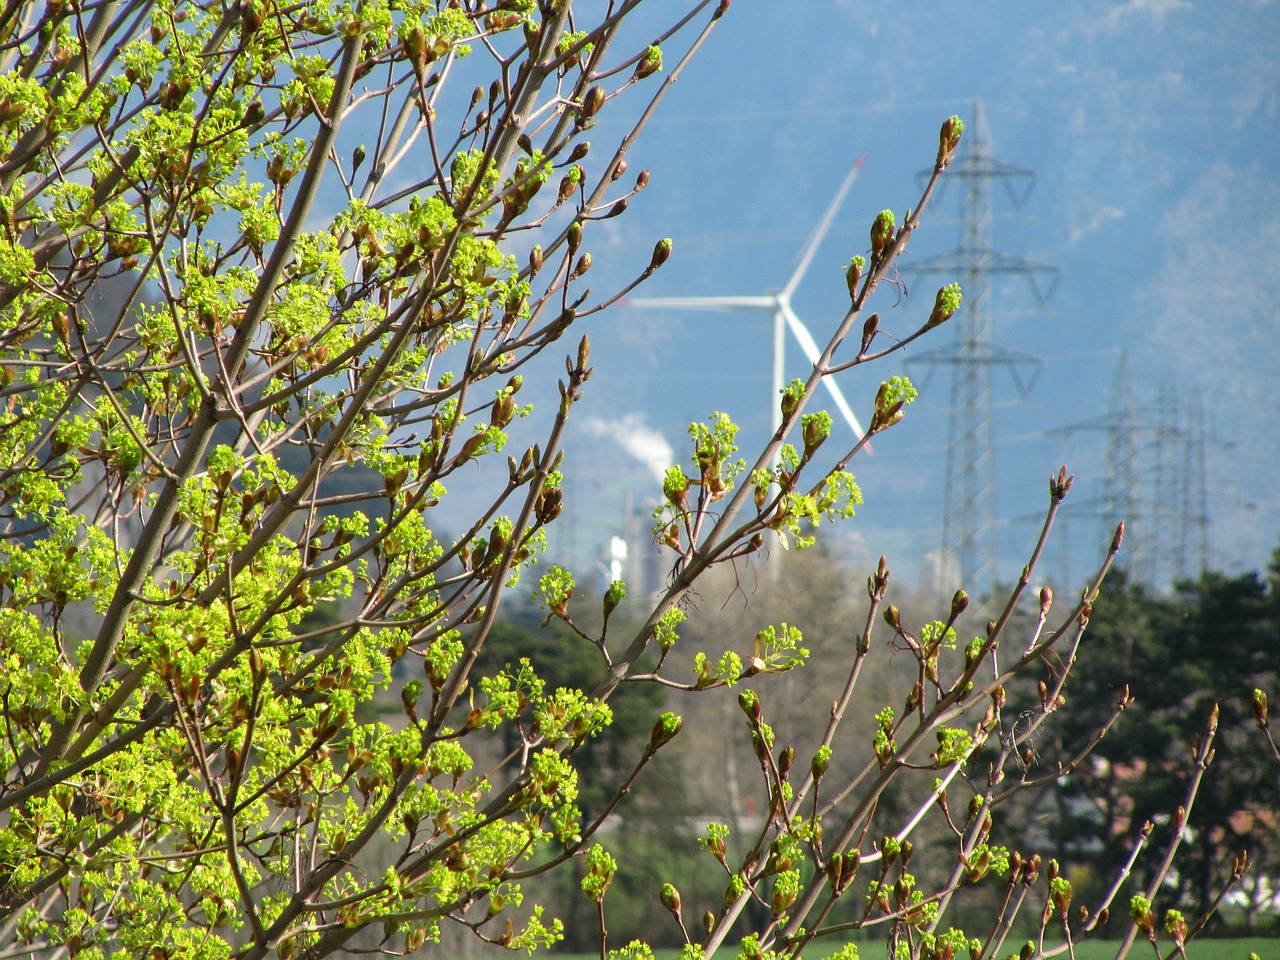 pinwheel energy wind power free photo